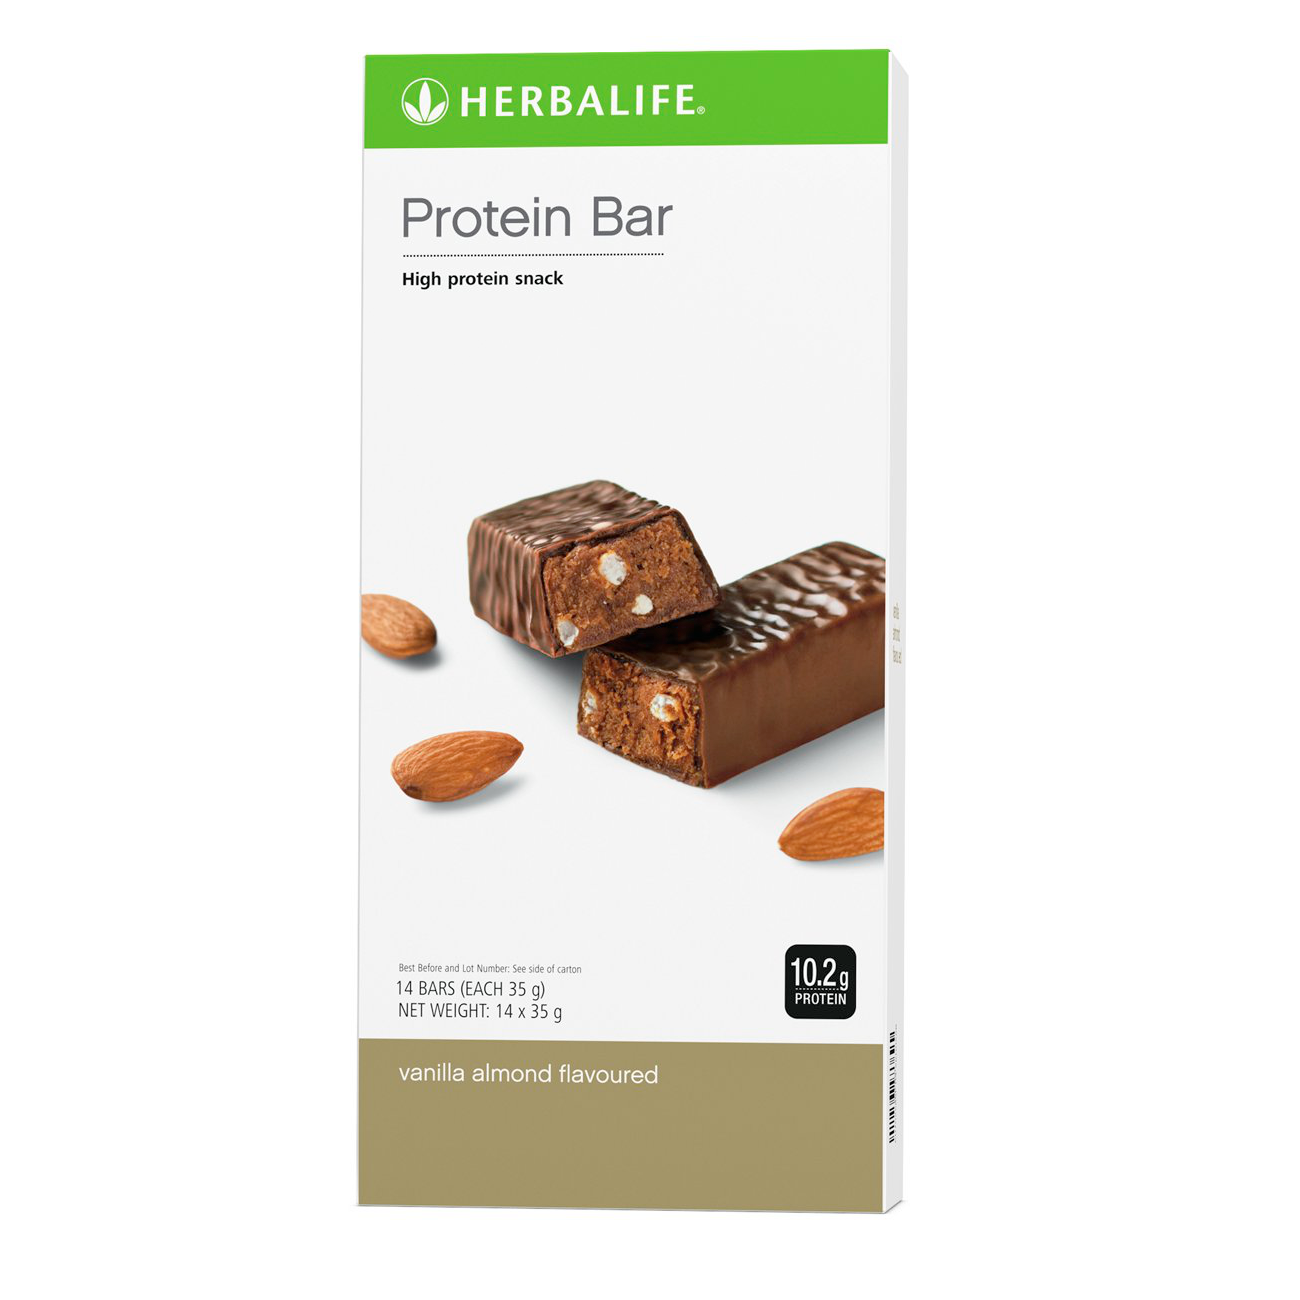 Protein Bars  Vanilla Almond Flavoured product shot